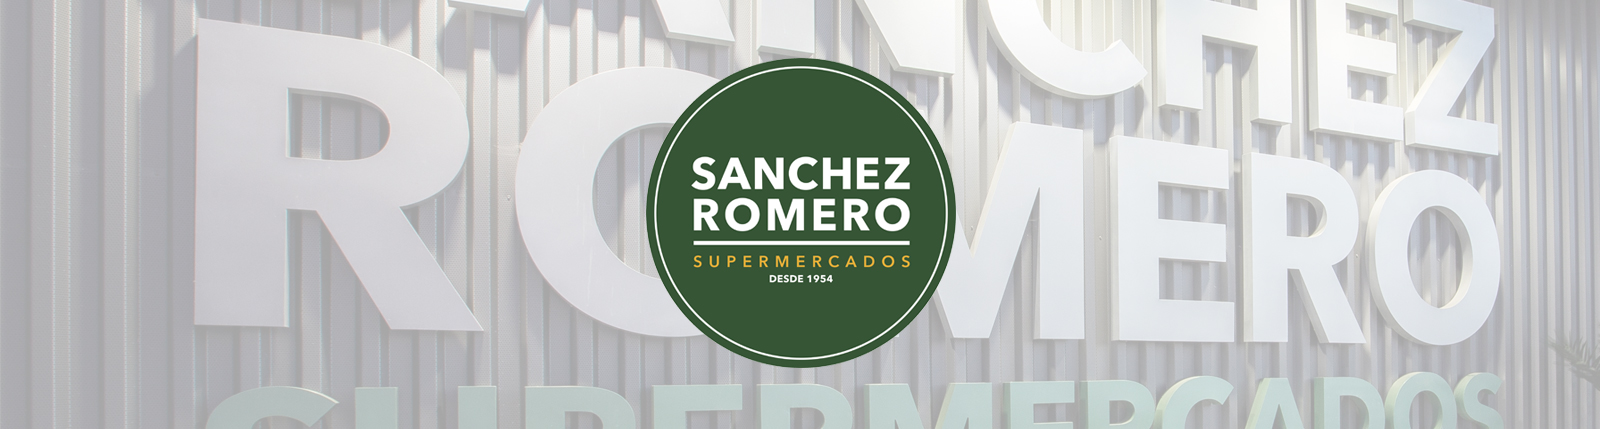 SANCHEZ ROMERO Supermercados